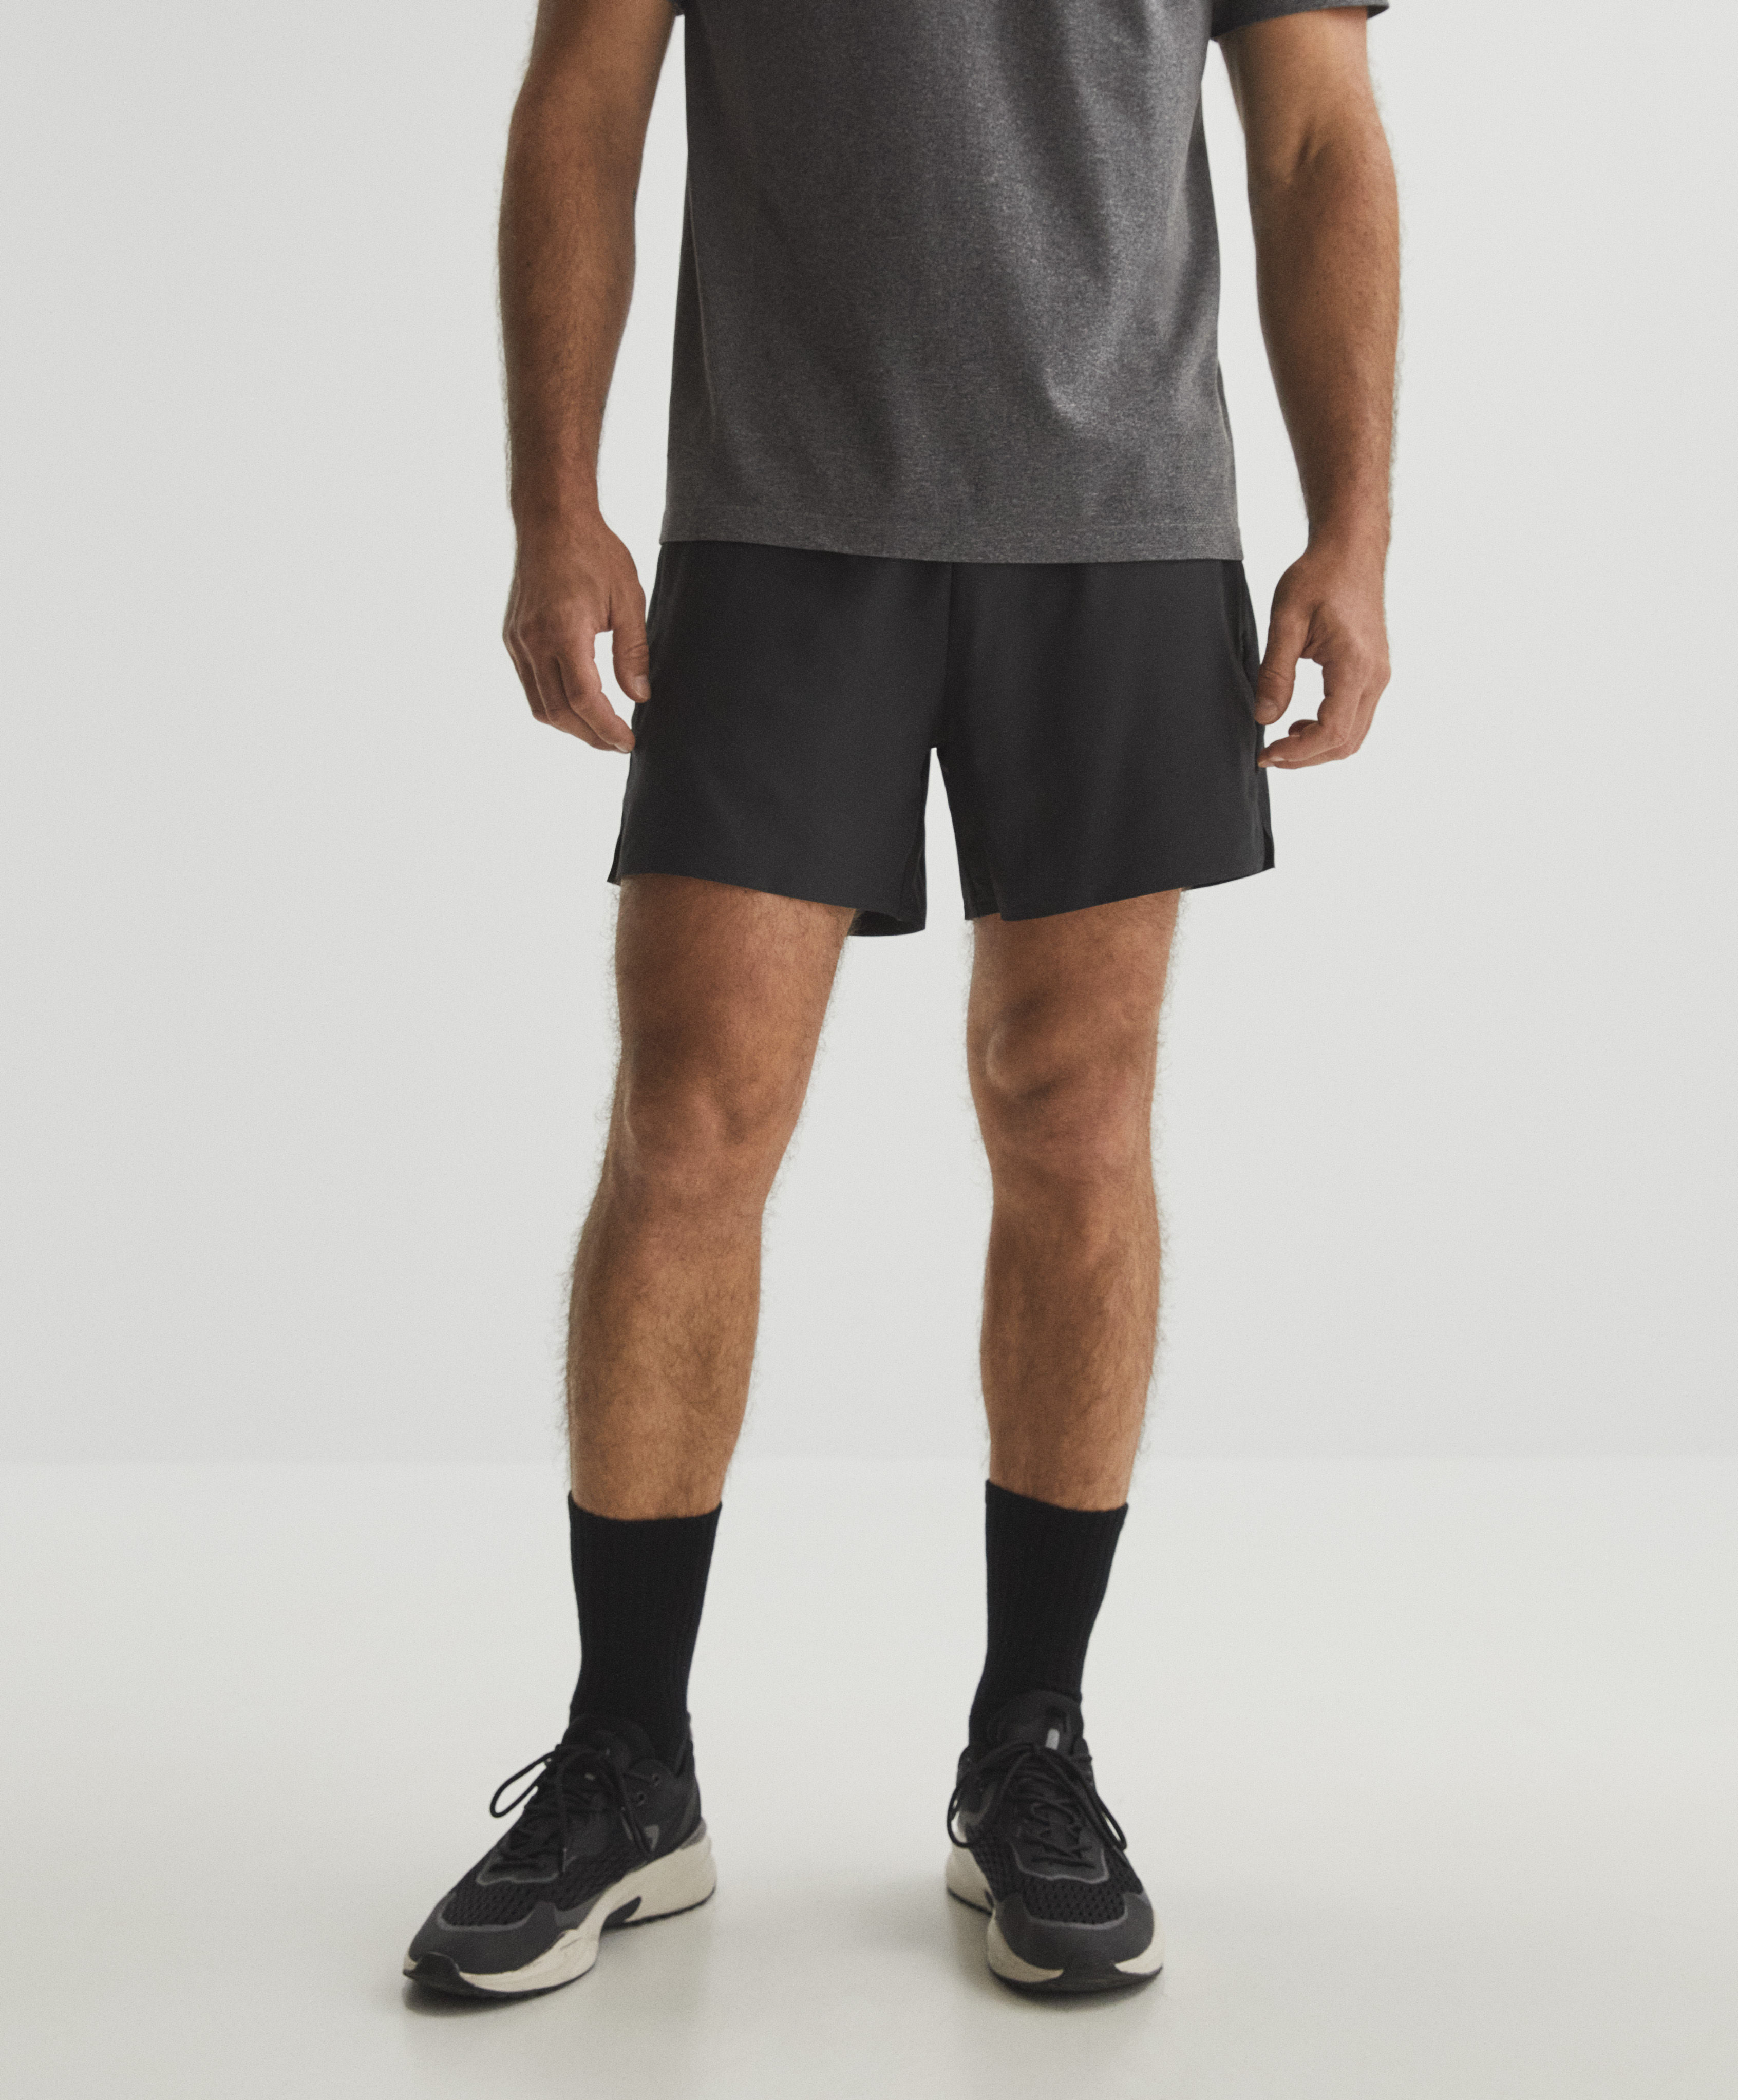 13 cm 2-in-1 training shorts